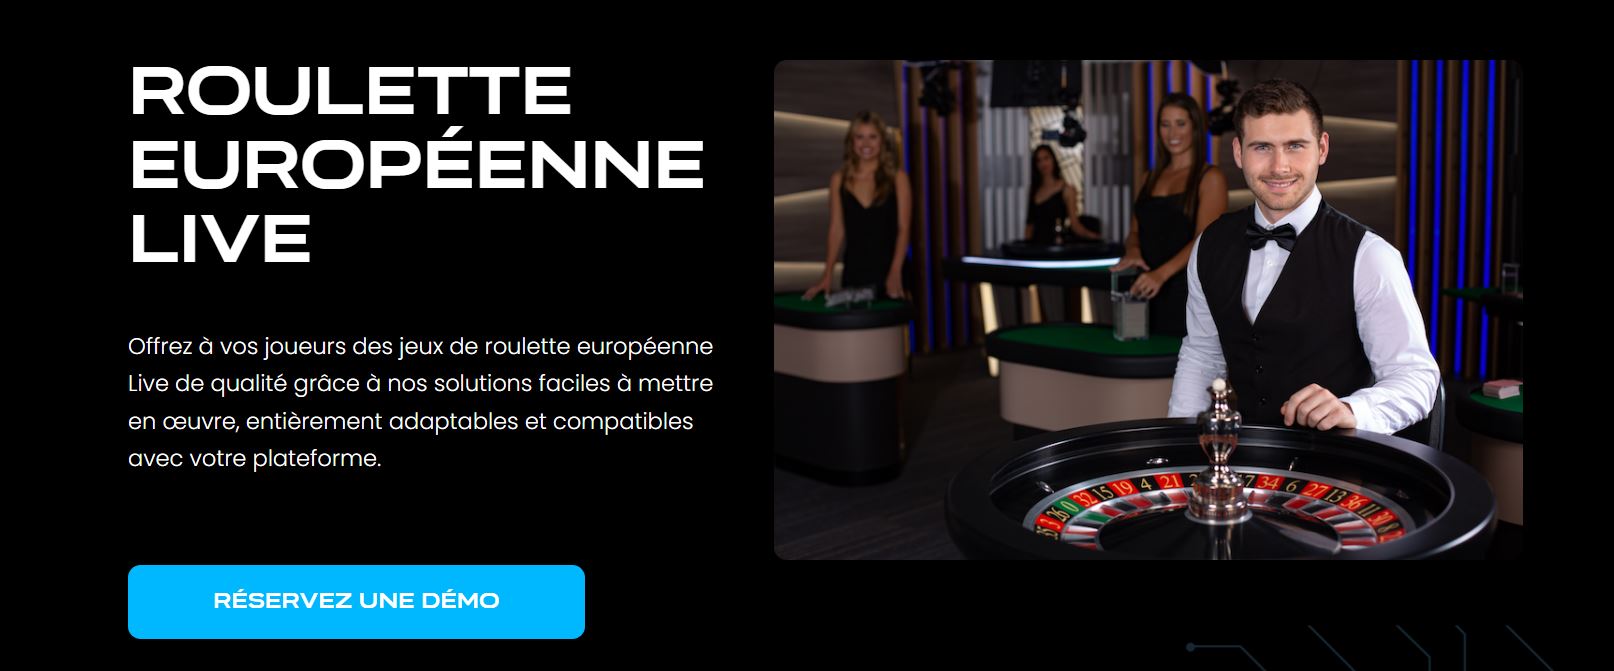 Roulette Européenne en direct de Vivo Gaming - Vivo Gaming Casino Avis